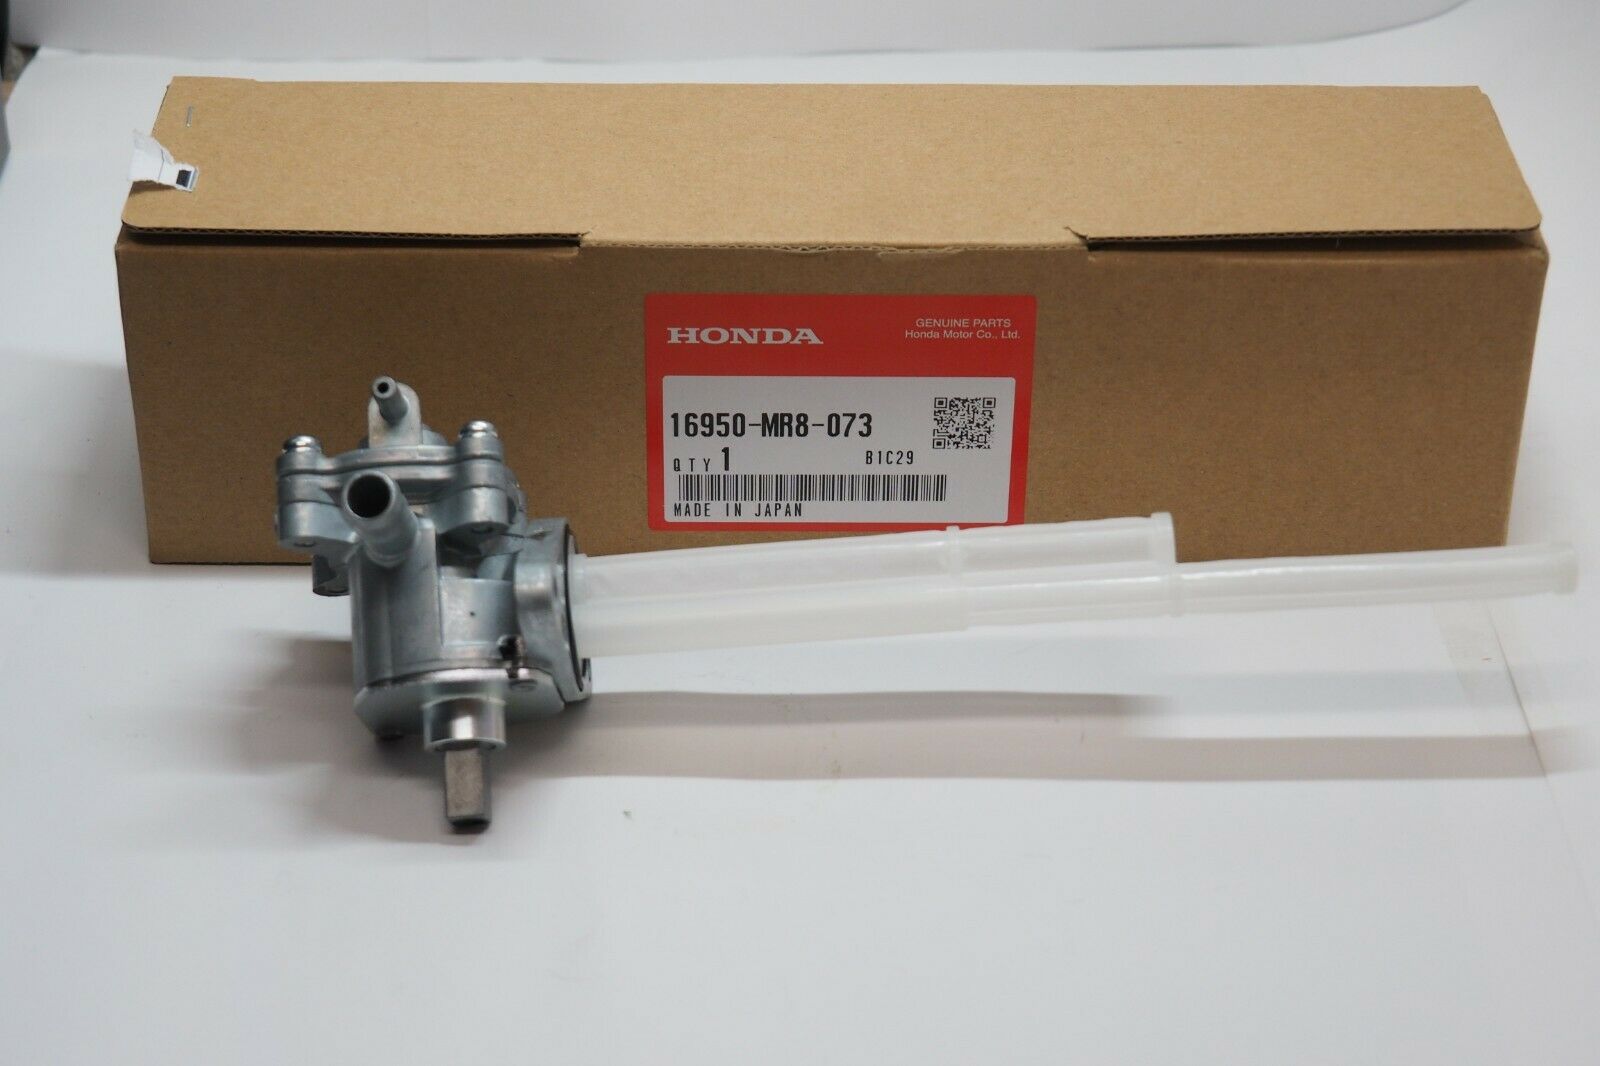 HONDA Genuine Parts Fuel Cock Assy for VFR400R RVF400 16950-MR8-073 NIB ★